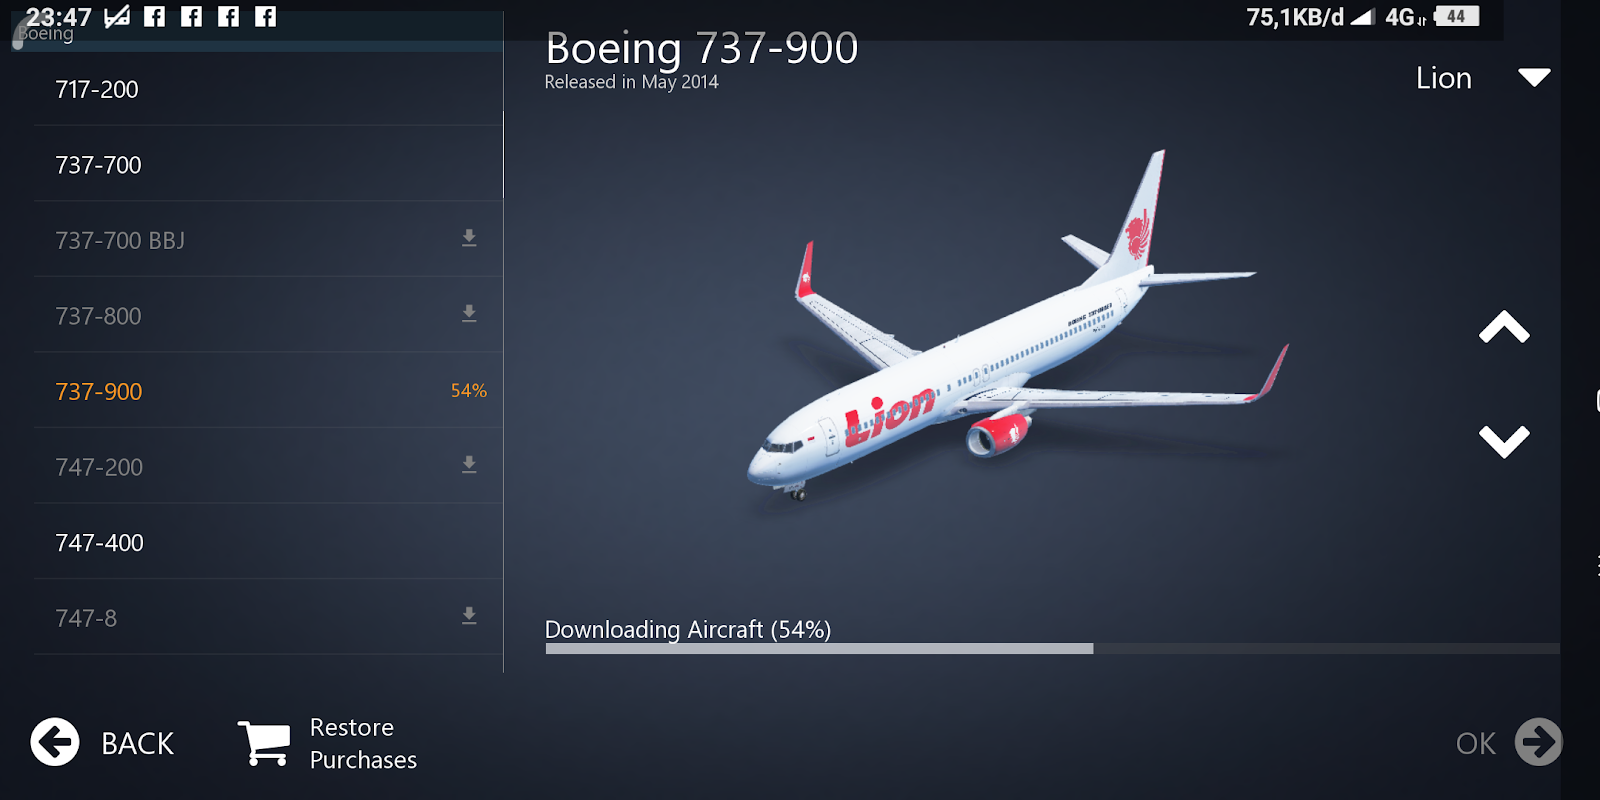 Скорость самолета 737. Boeing 737-800 скорость полёта. Боинг 737-800 высота полета. Скорость самолета Боинг 737 800. Боинг 737-700 Вингл.